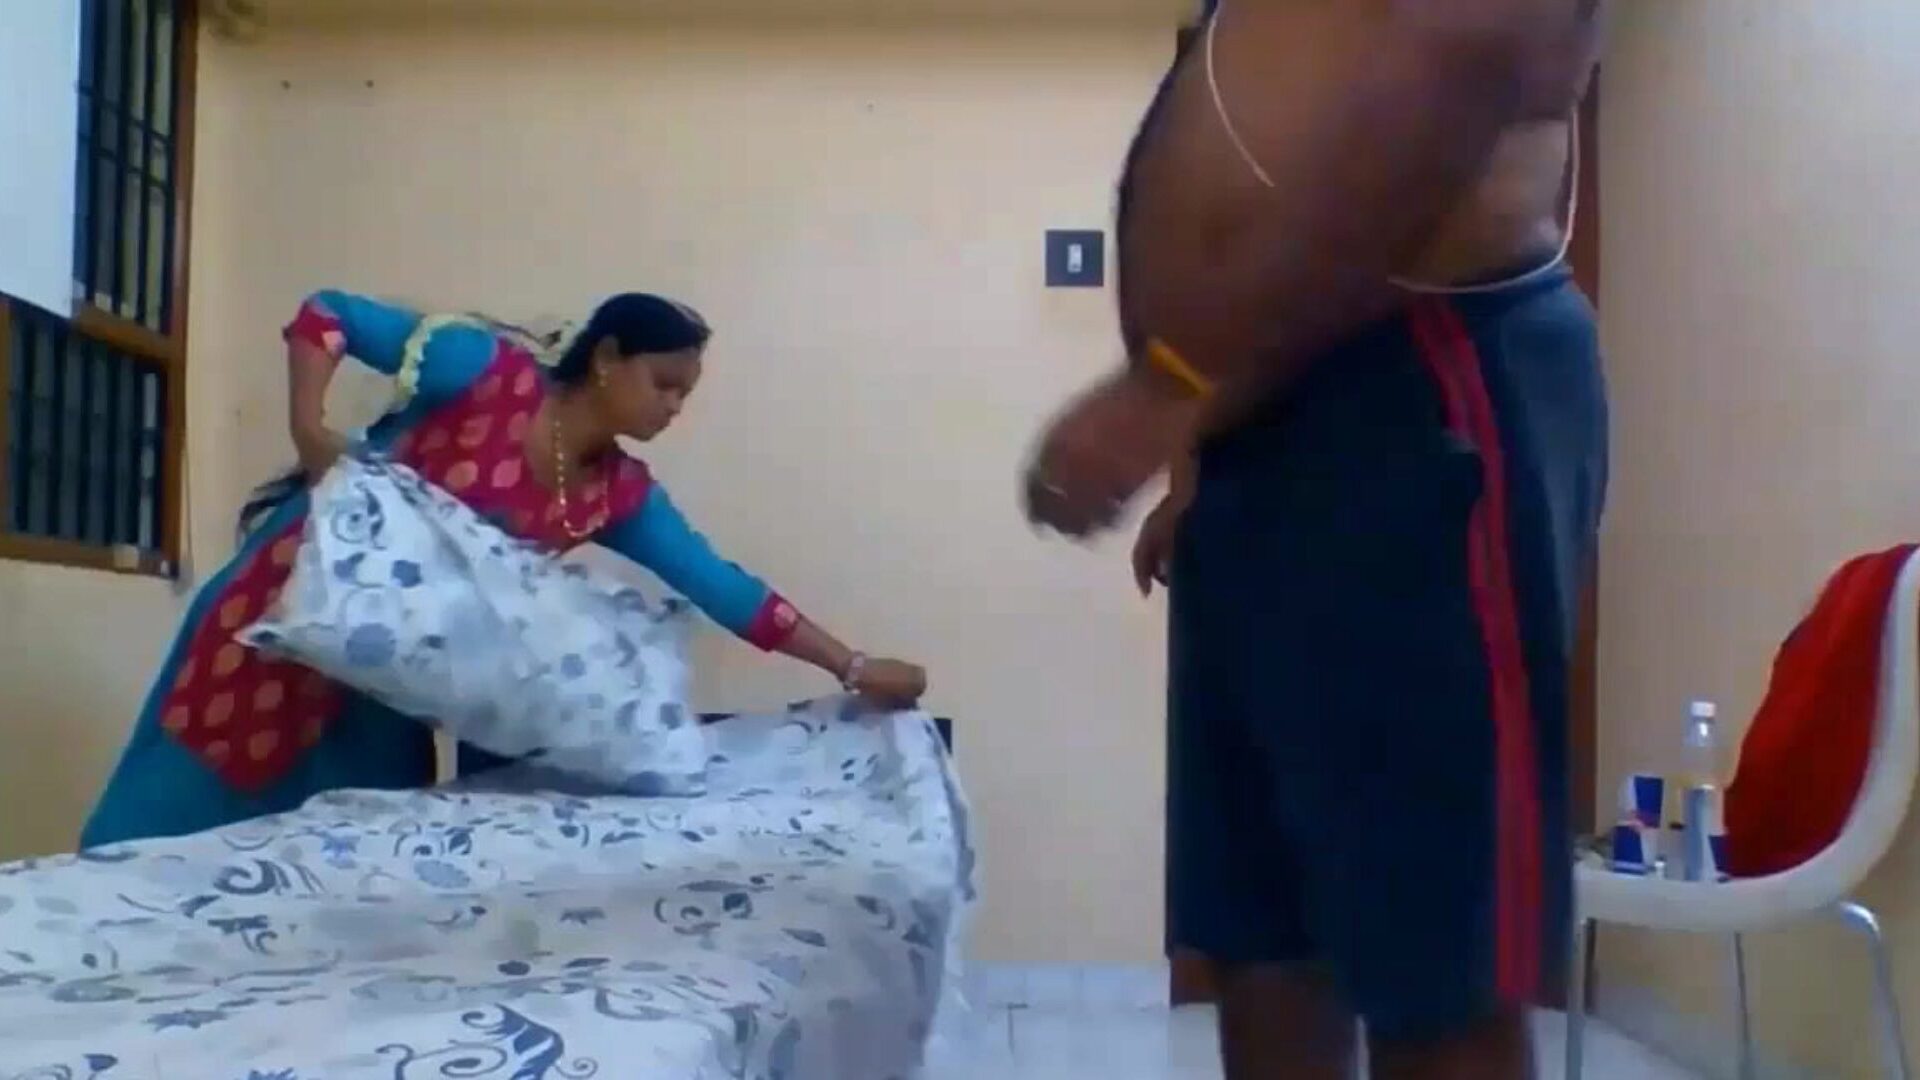 tamilska fantazija: besplatni indijski hd porno video 80 - xhamster gledajte tamil fantasy tube fuckfest video besplatno za sve na xhamsteru, s dominantnim gomilom indijskih tamilskih cijevi i mobilnih tamilskih hd porno filmova